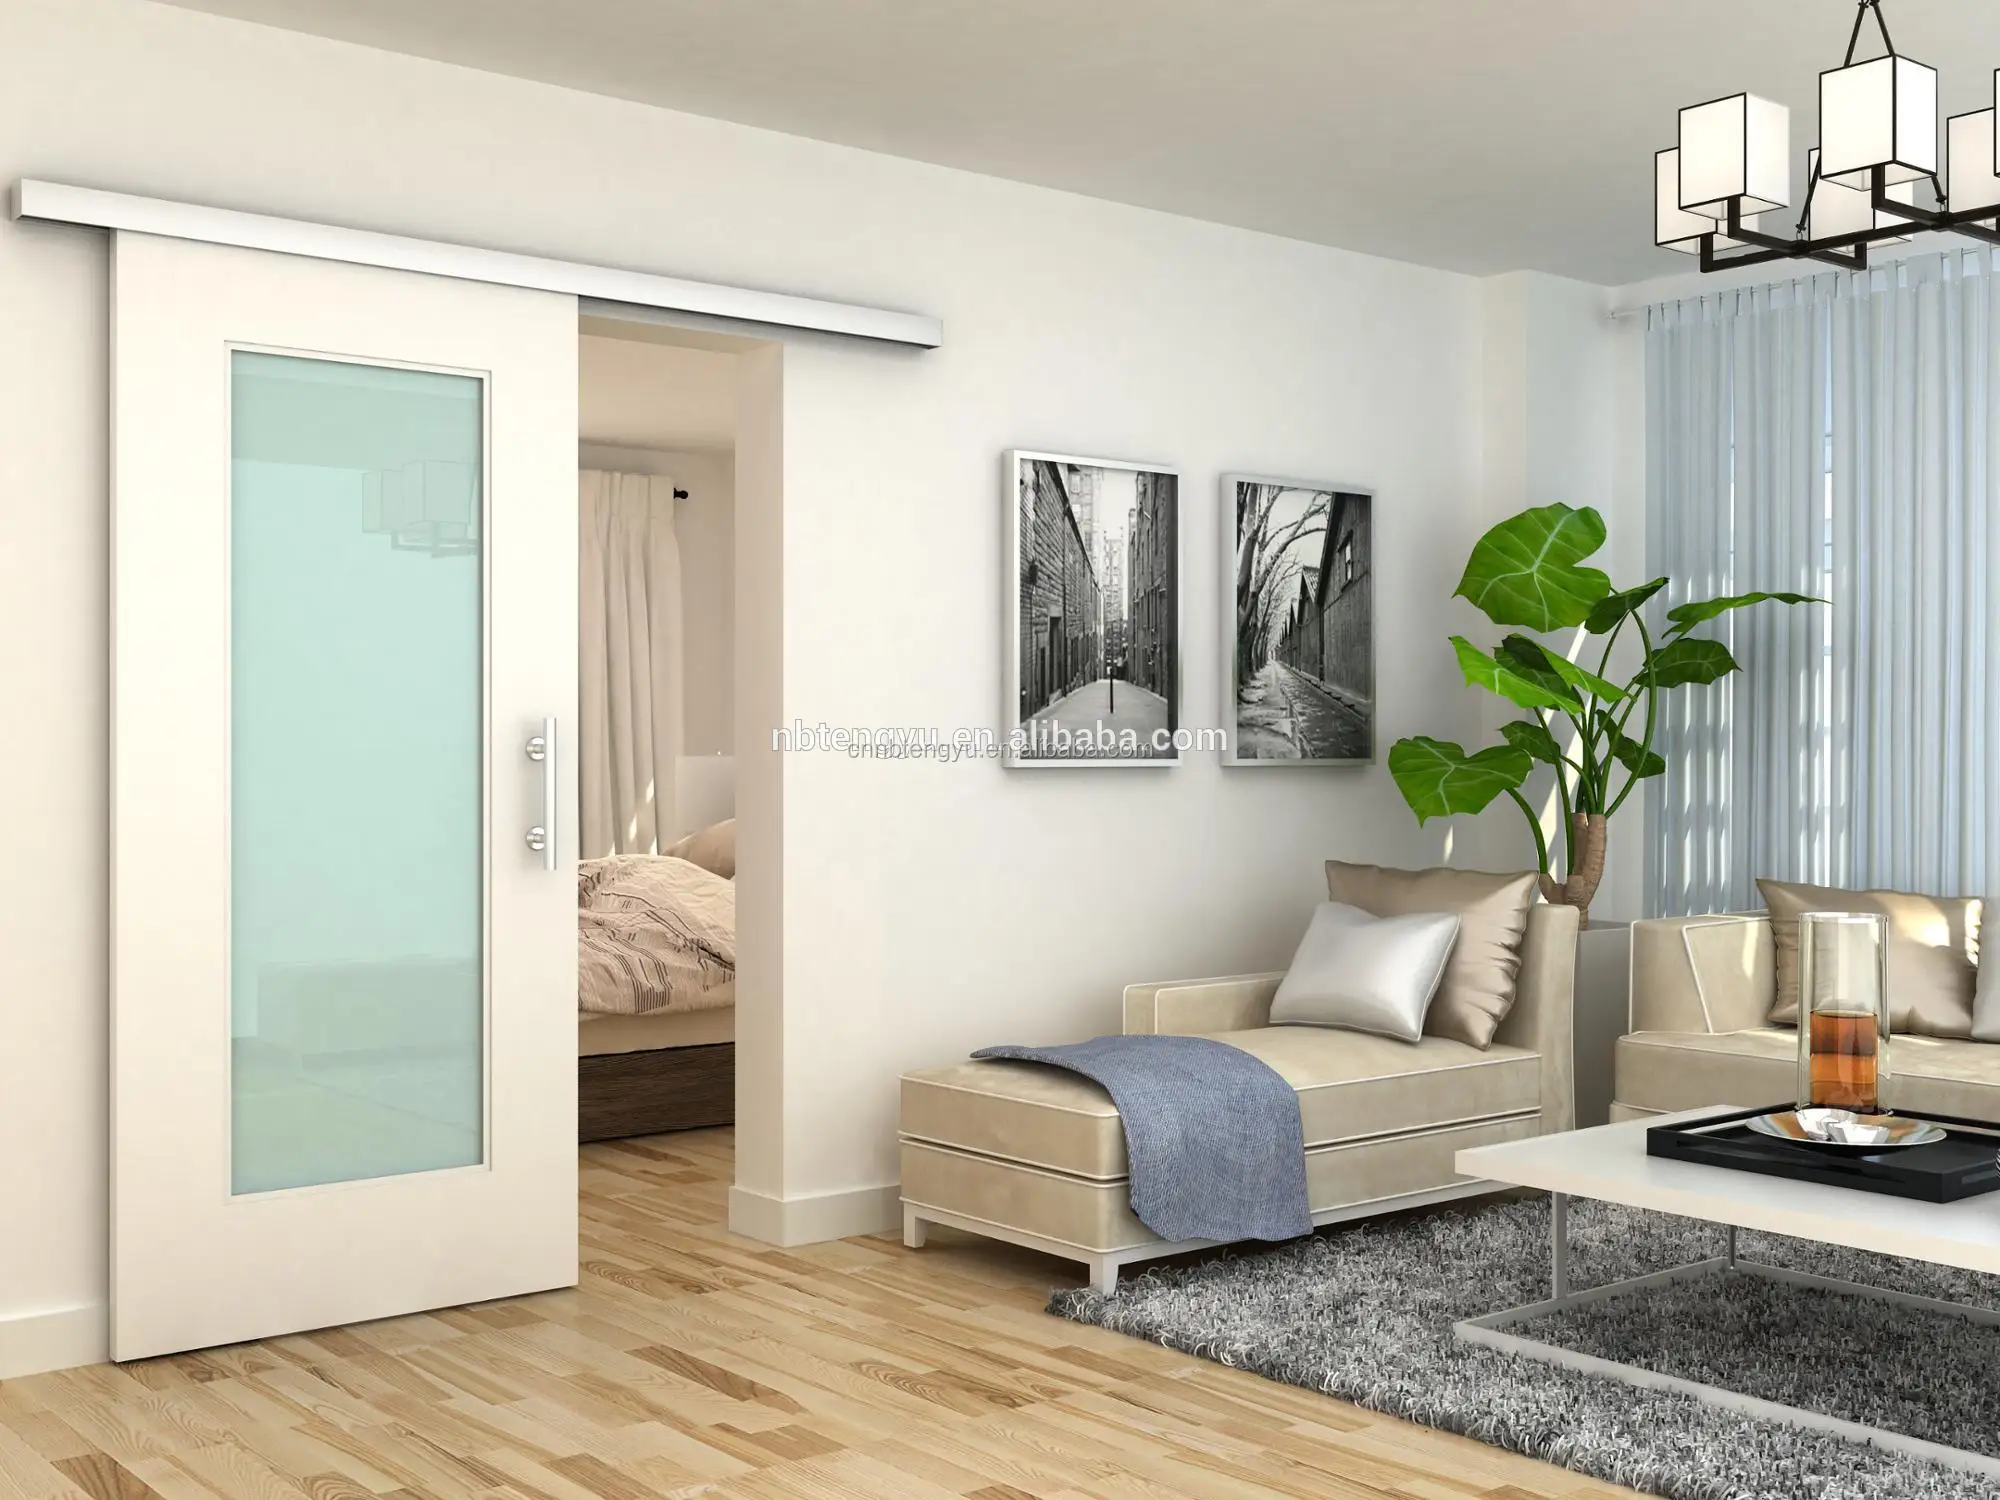 New Design Hotel Glass Wood Framed Sliding Glass Door/Mirrored Barn Door with Sliding Door Glass Hardware Kit